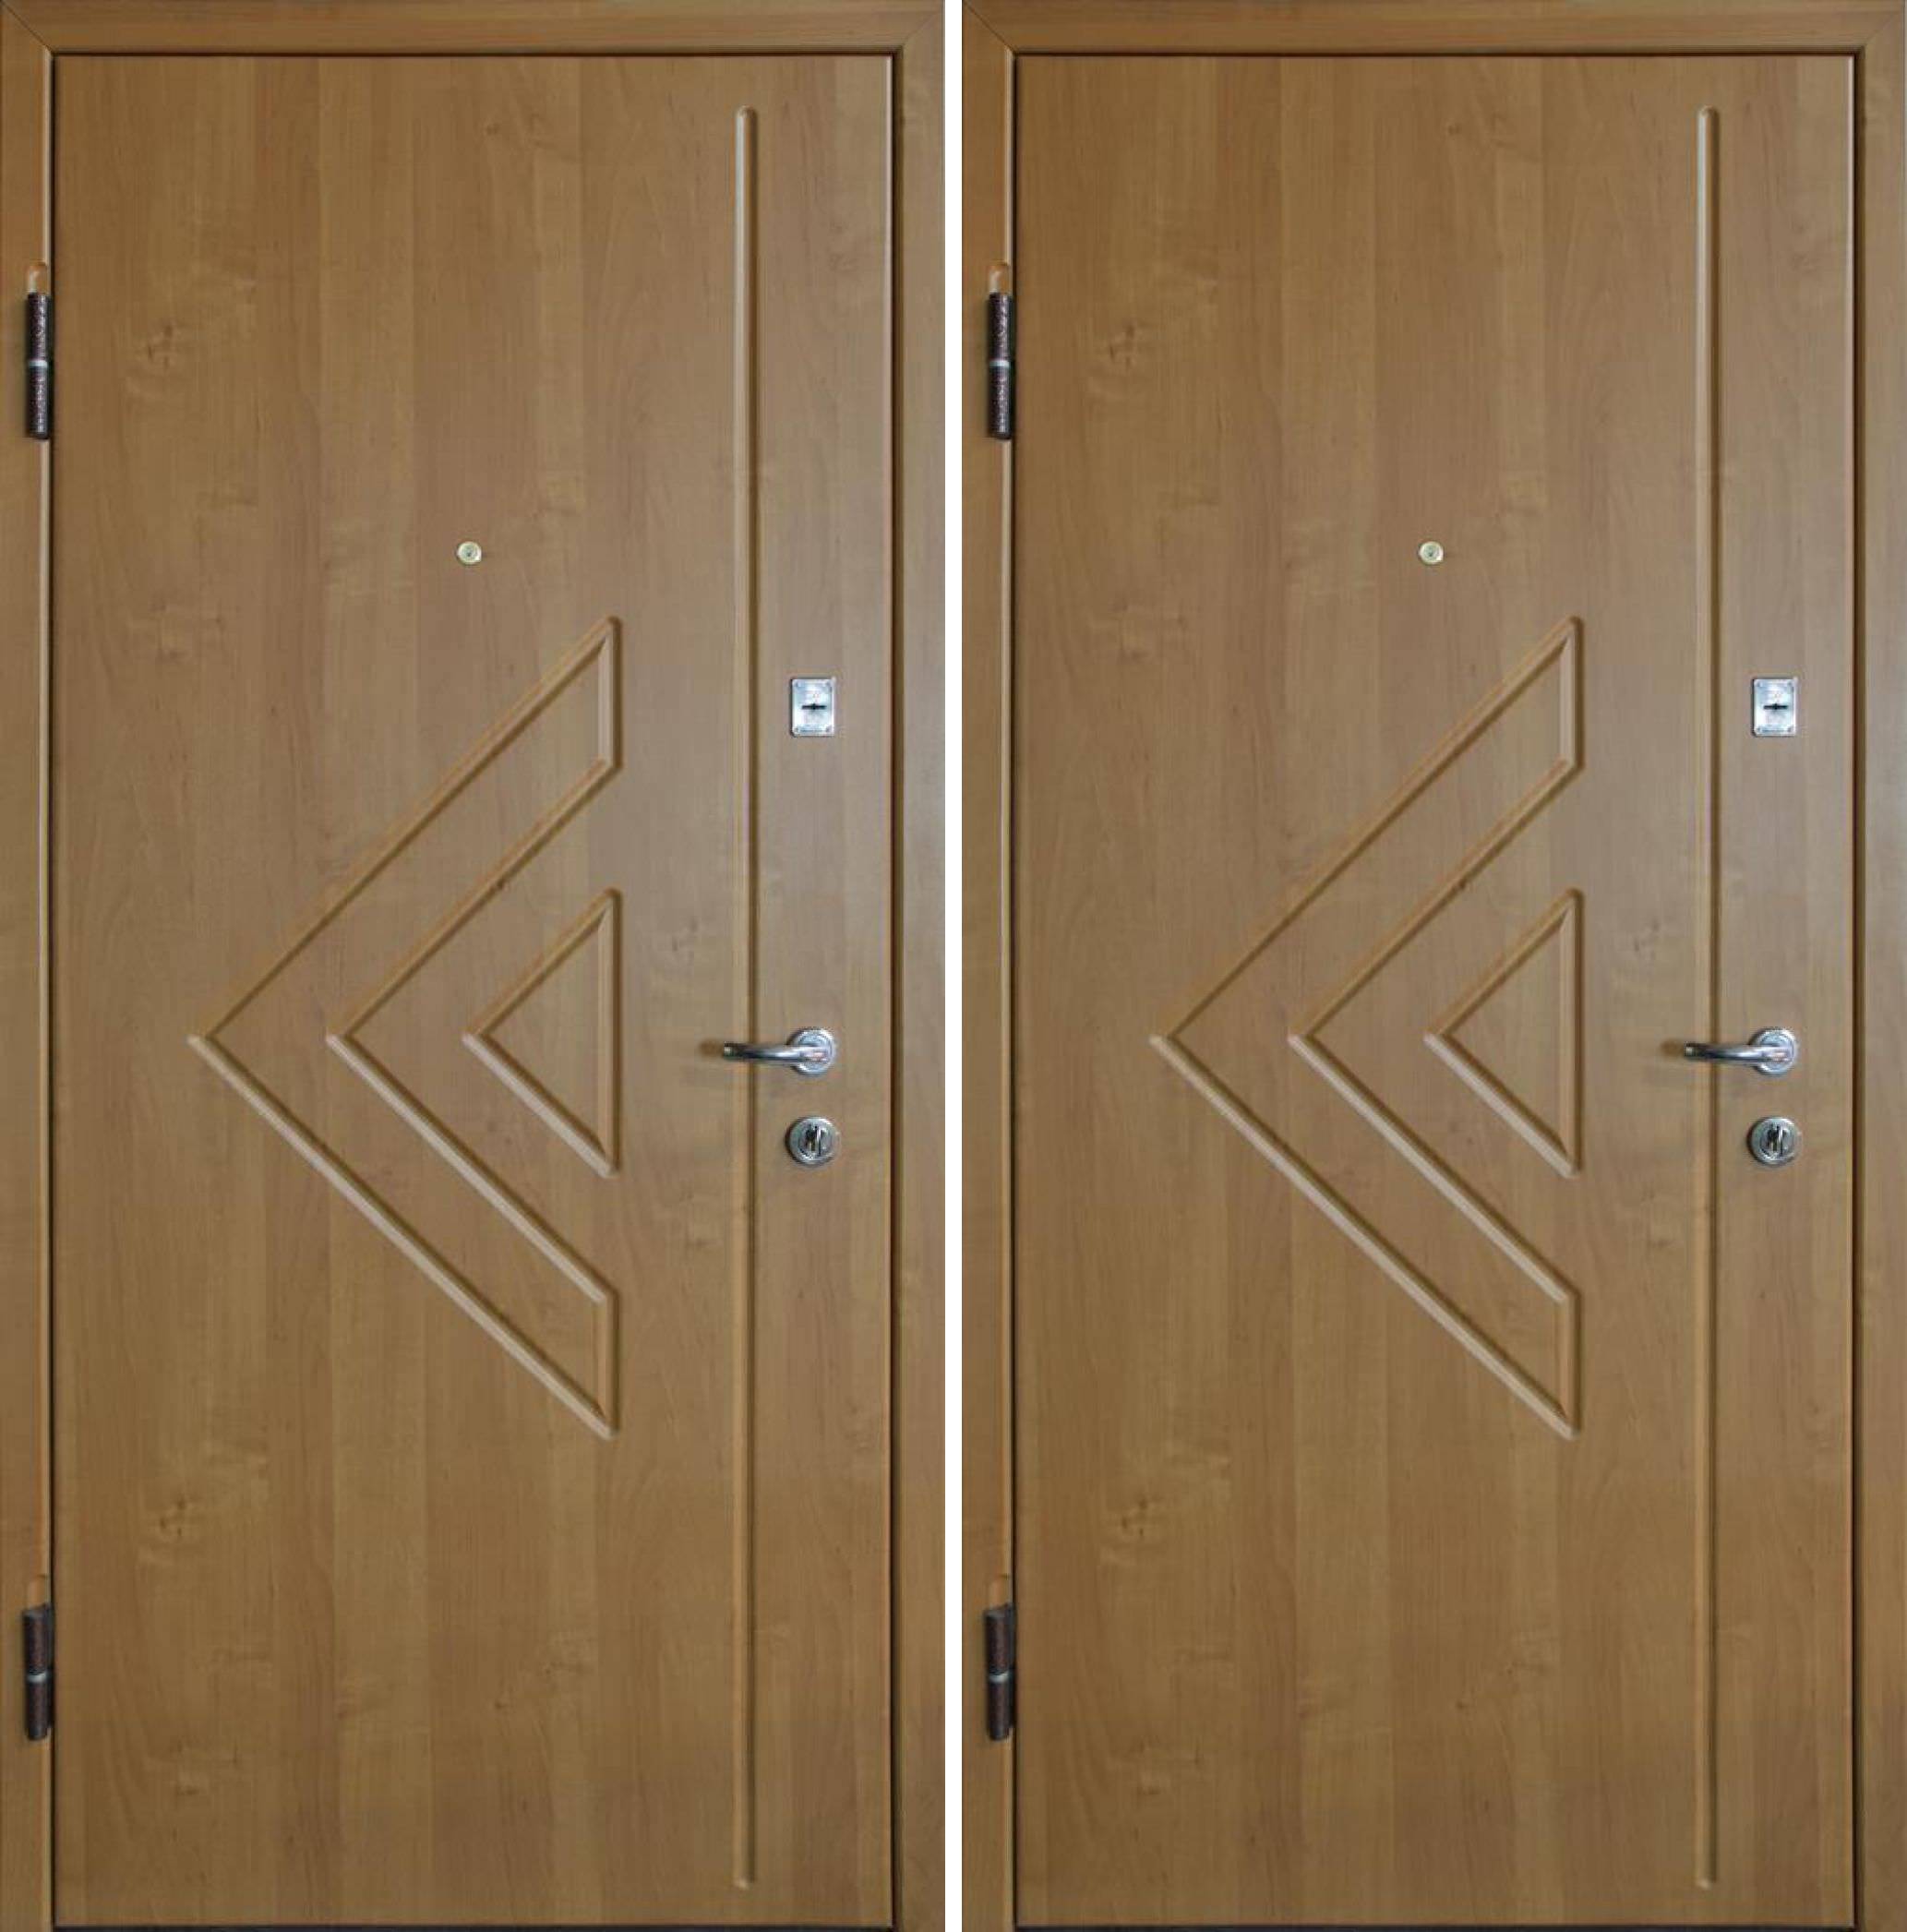 Дверь с плёнкой ПВХ (Арт. PV22)